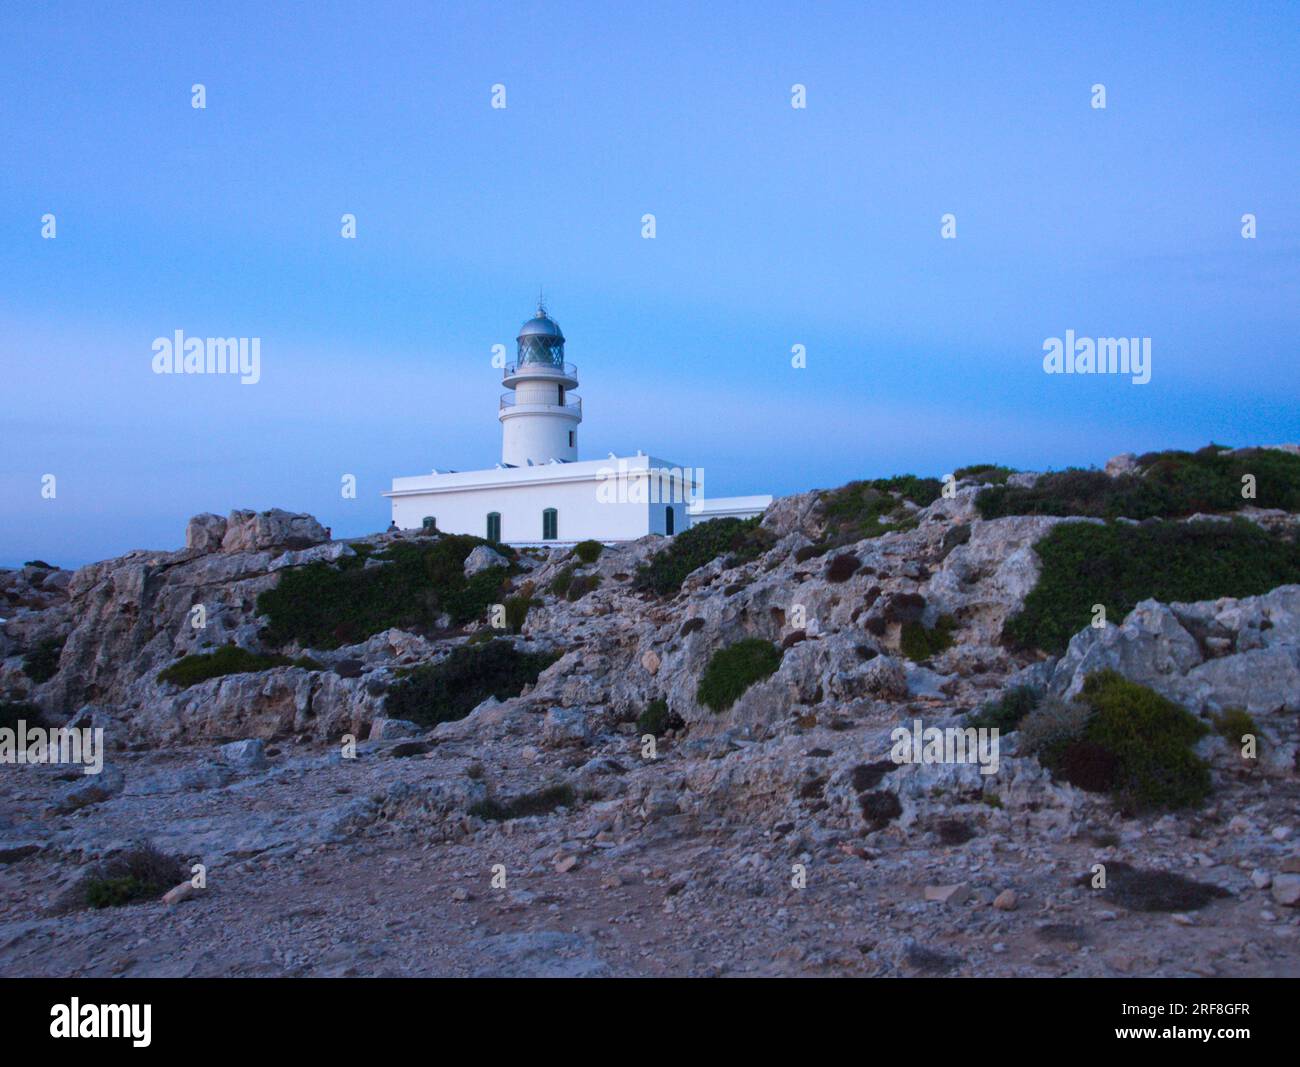 Un phare sur l'île de Minorque entouré d'un sol pierreux. Un faro de la Isla de Menorca rodeado de un terreno pedregoso. Banque D'Images